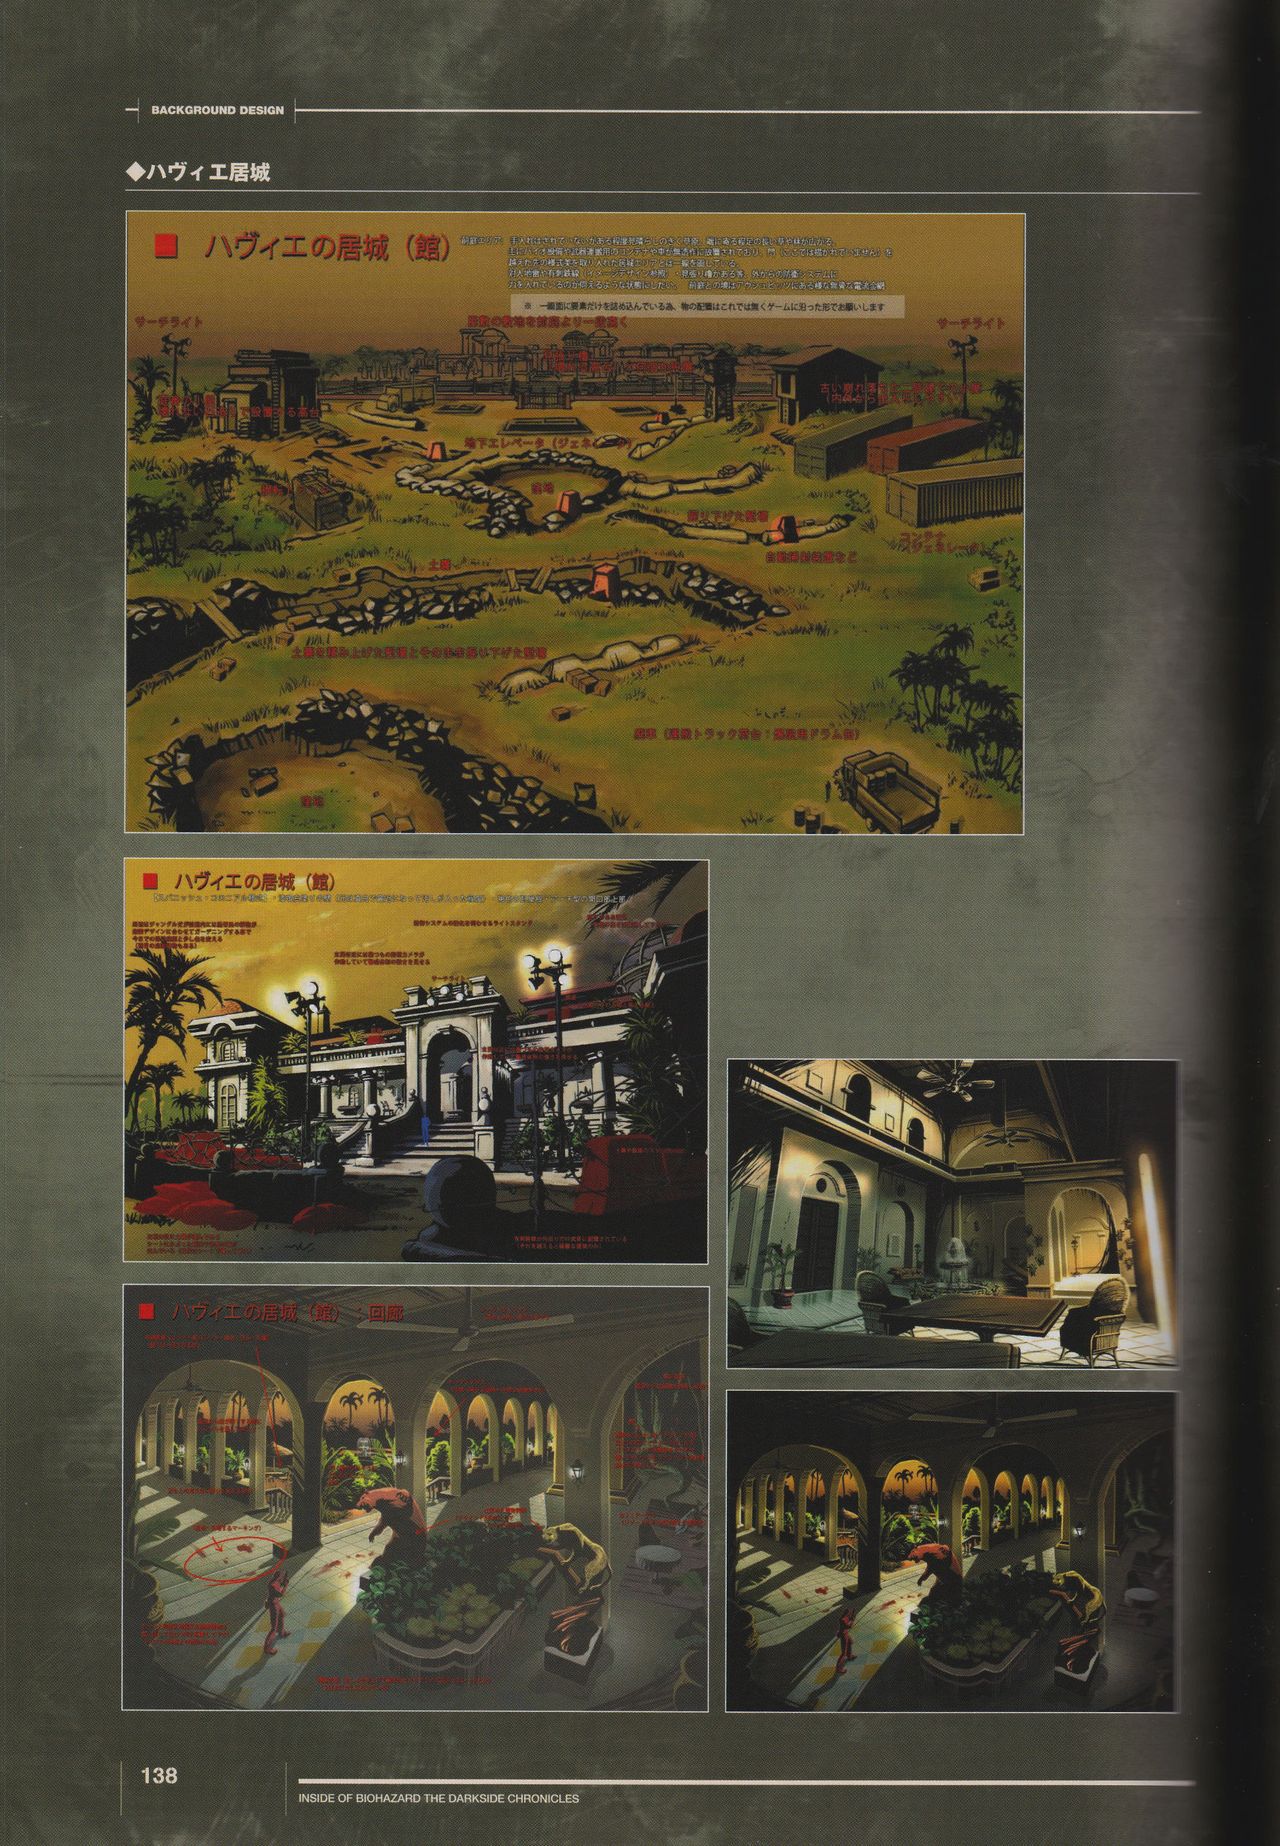 Resident Evil: The Darkside Chronicles Artbook 138